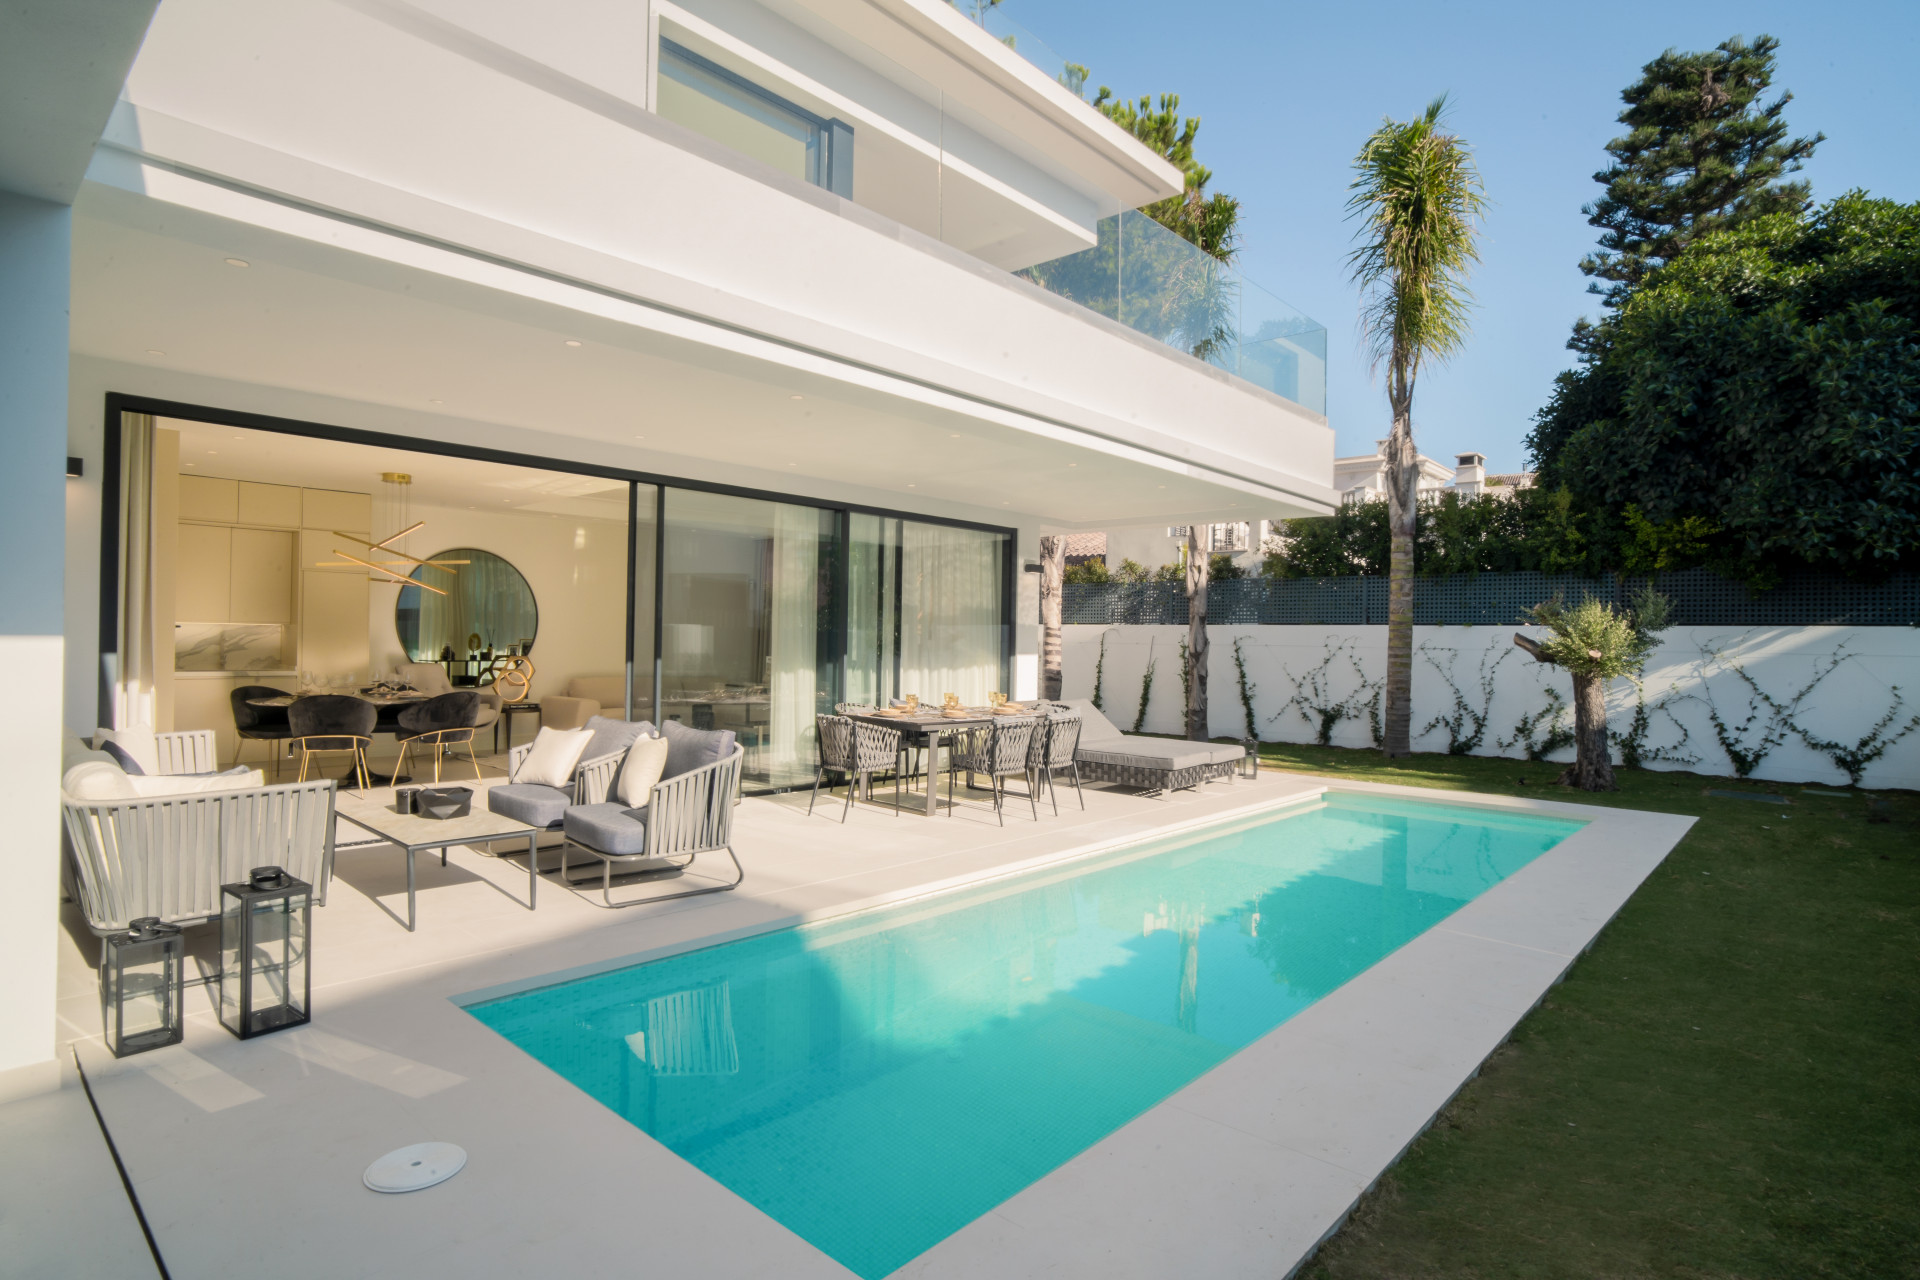 ARFV2139 - New villas for sale in beach location on the Golden Mile in Marbella